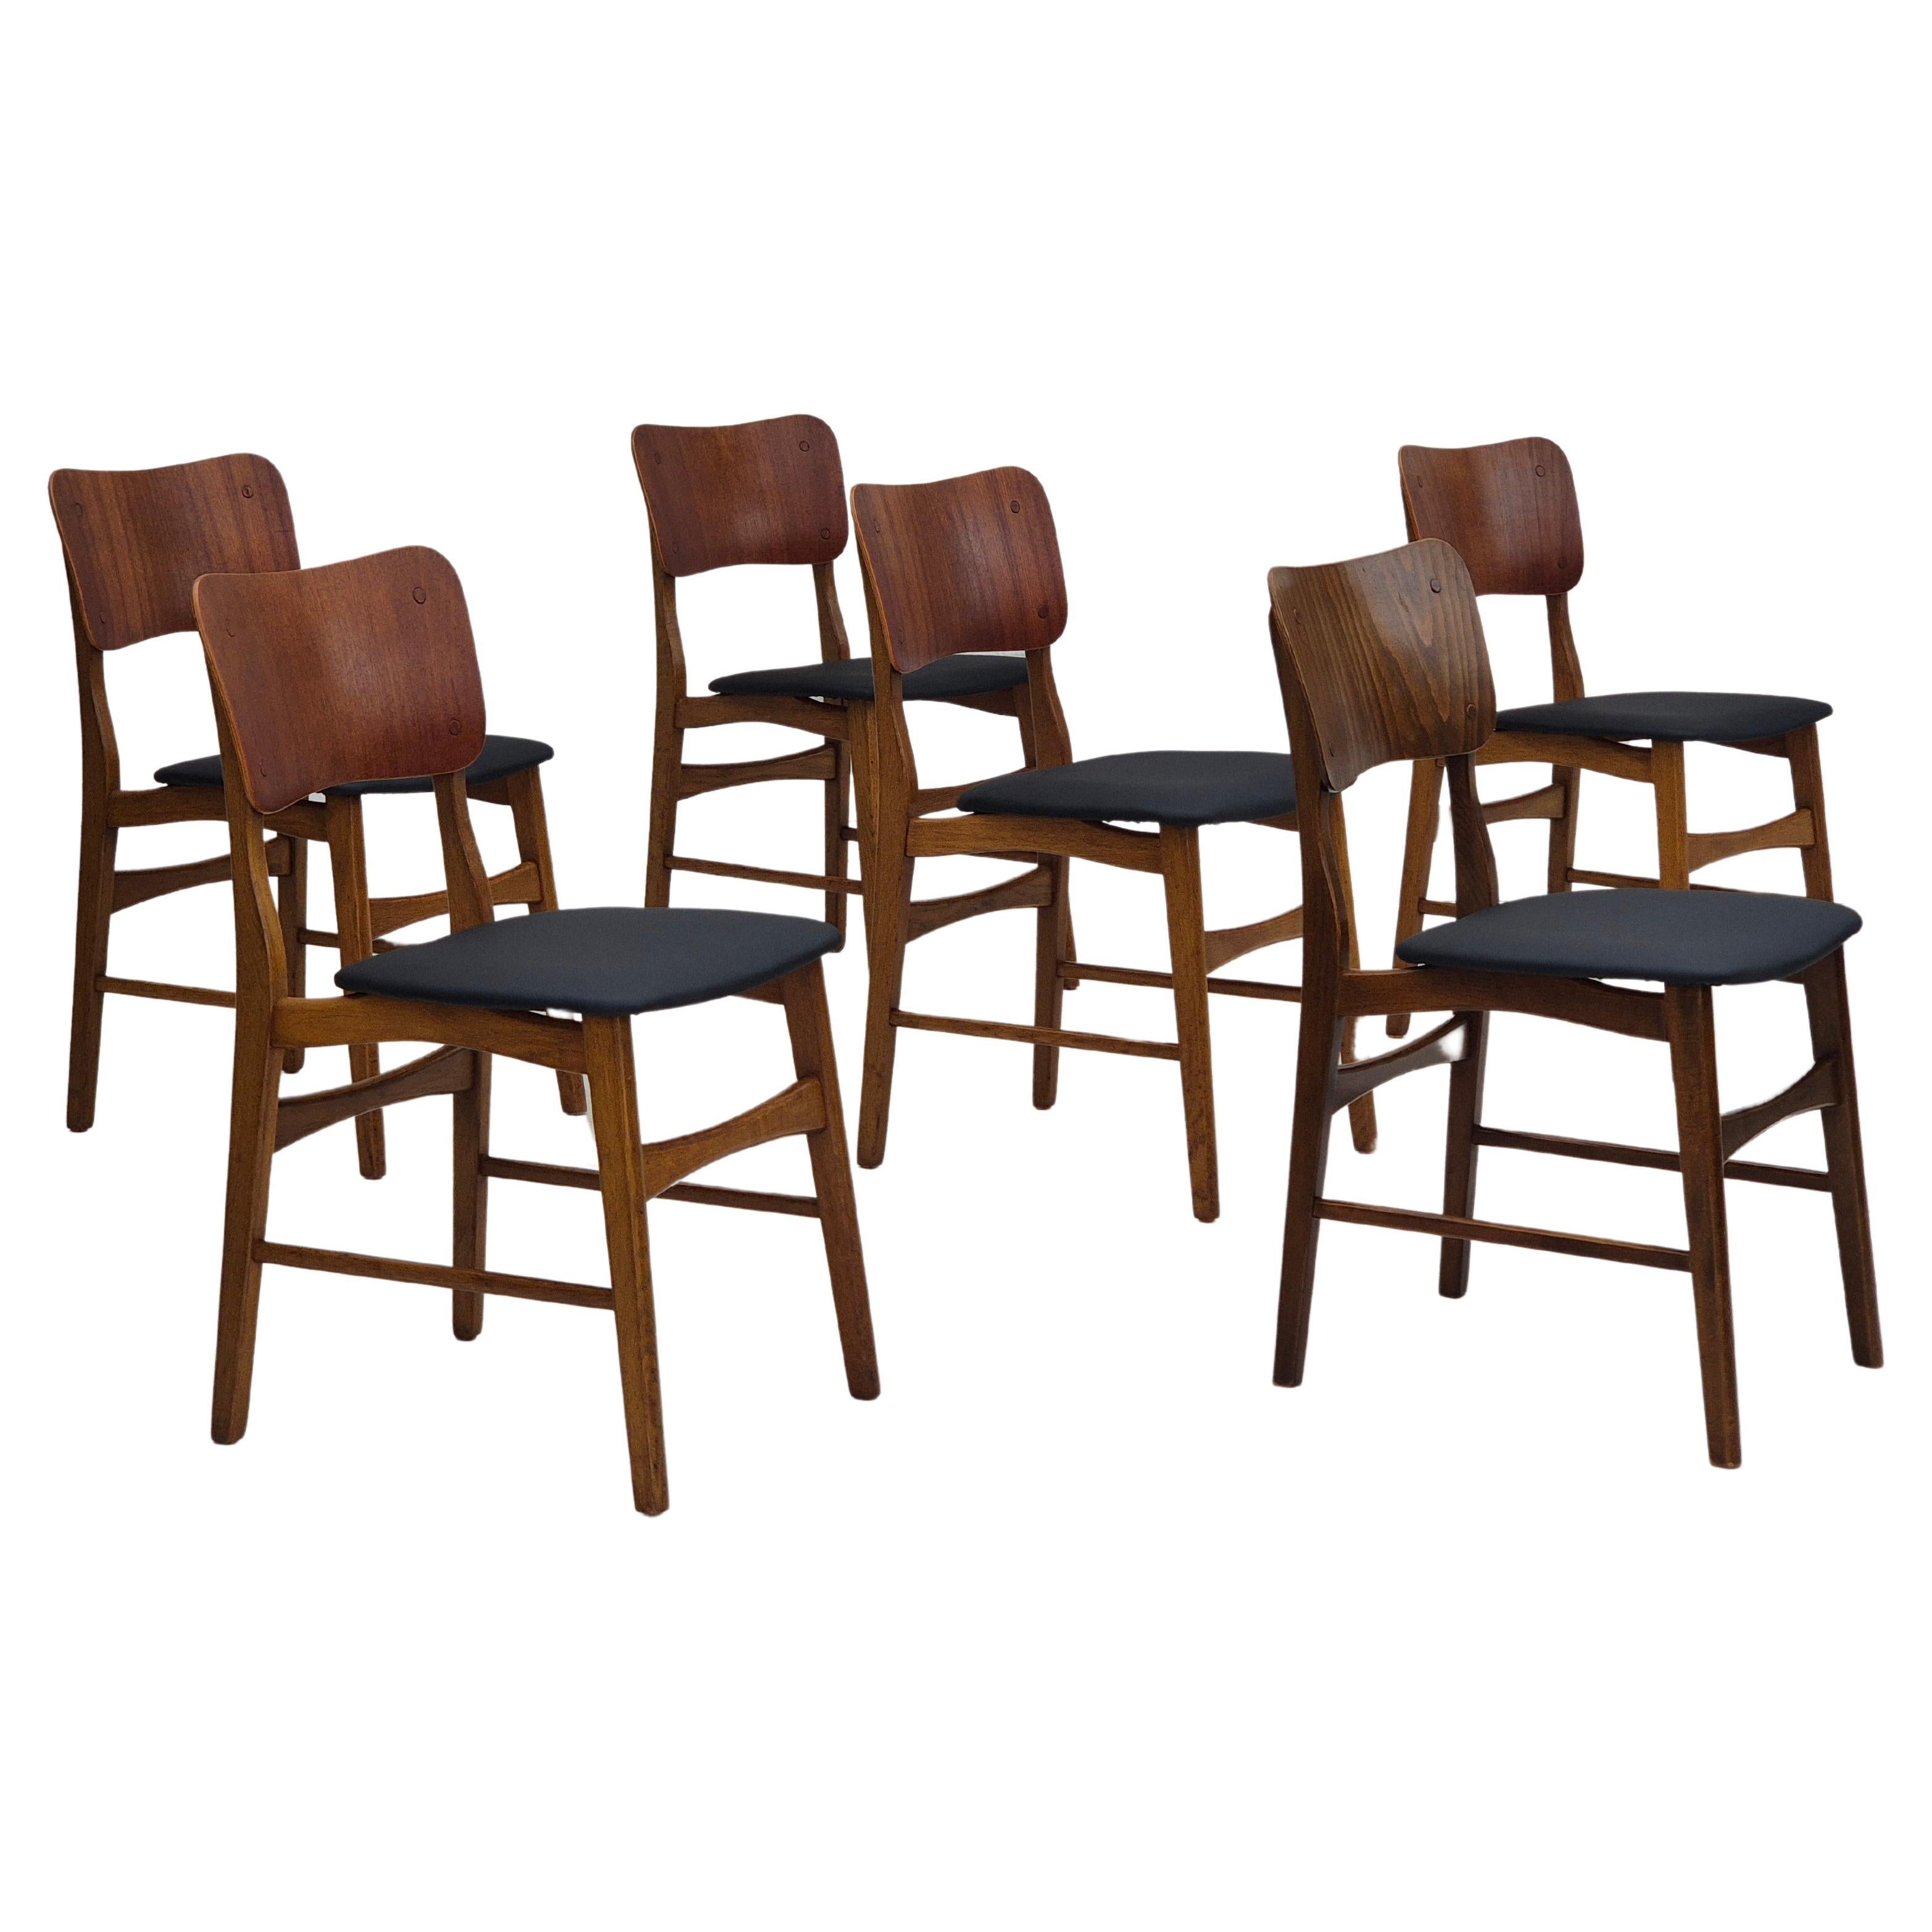 Christensen & Larsen Dining Room Chairs